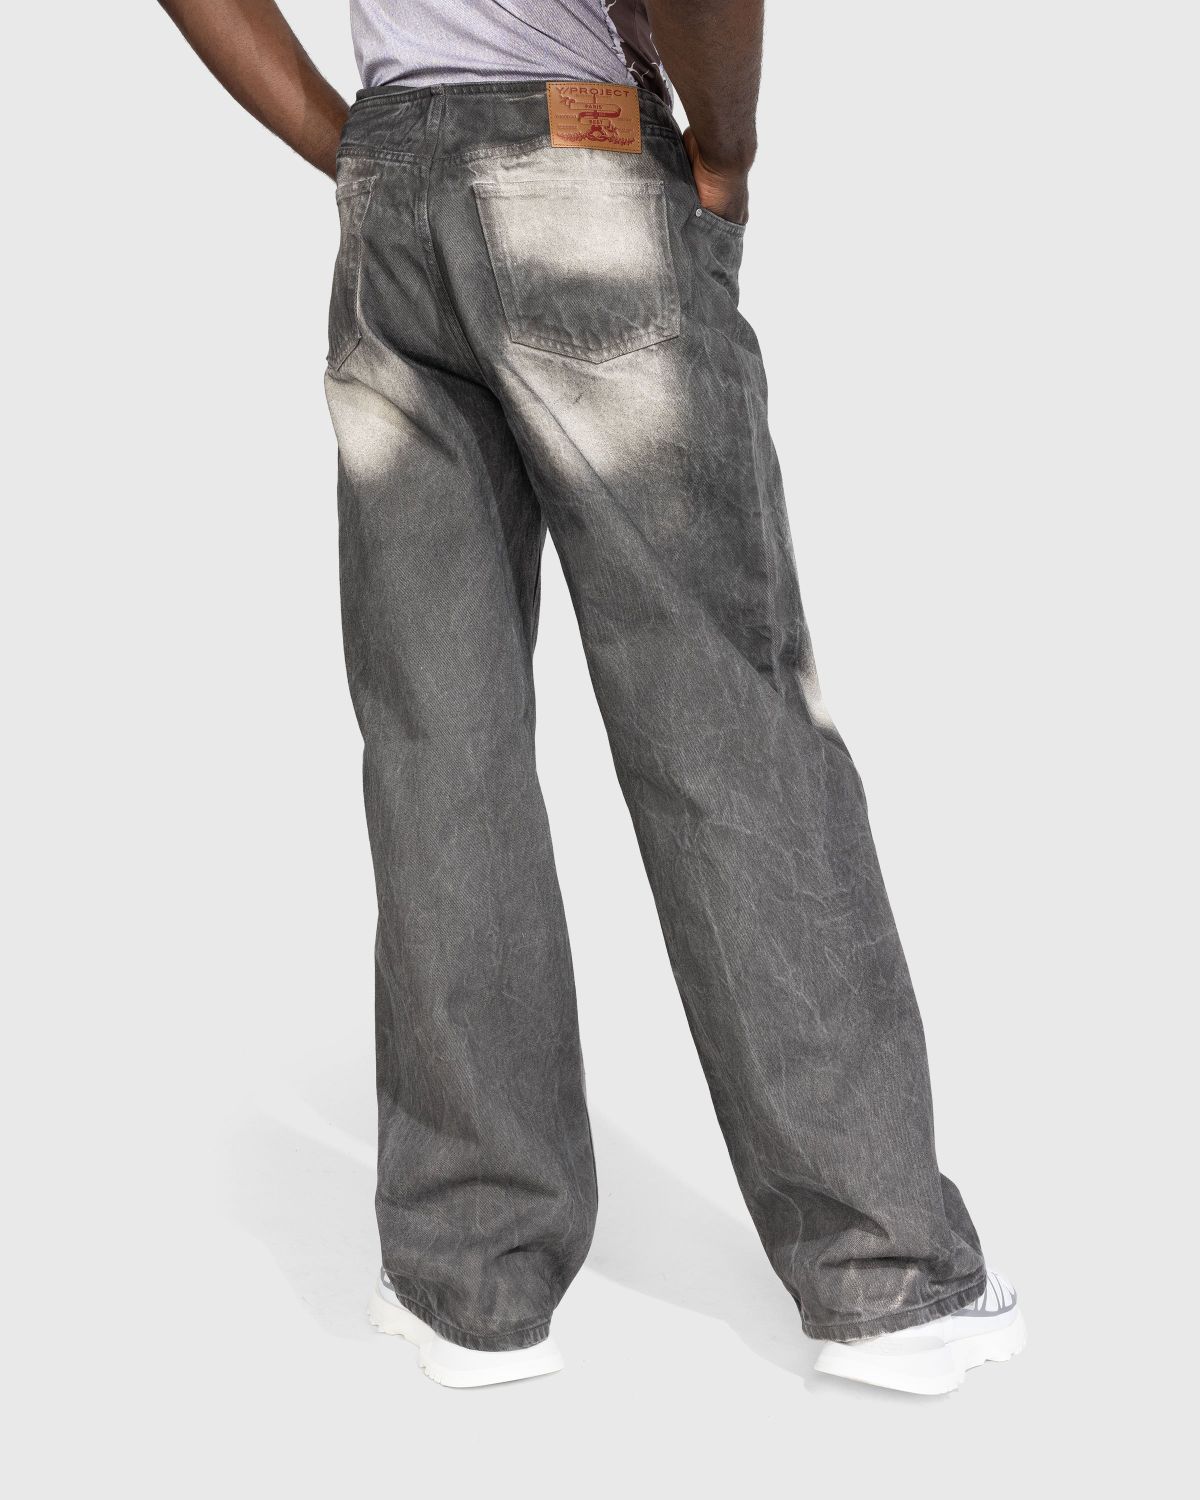 Y/Project – Y Belt Arc Jeans Faded Black - Pants - Grey - Image 3